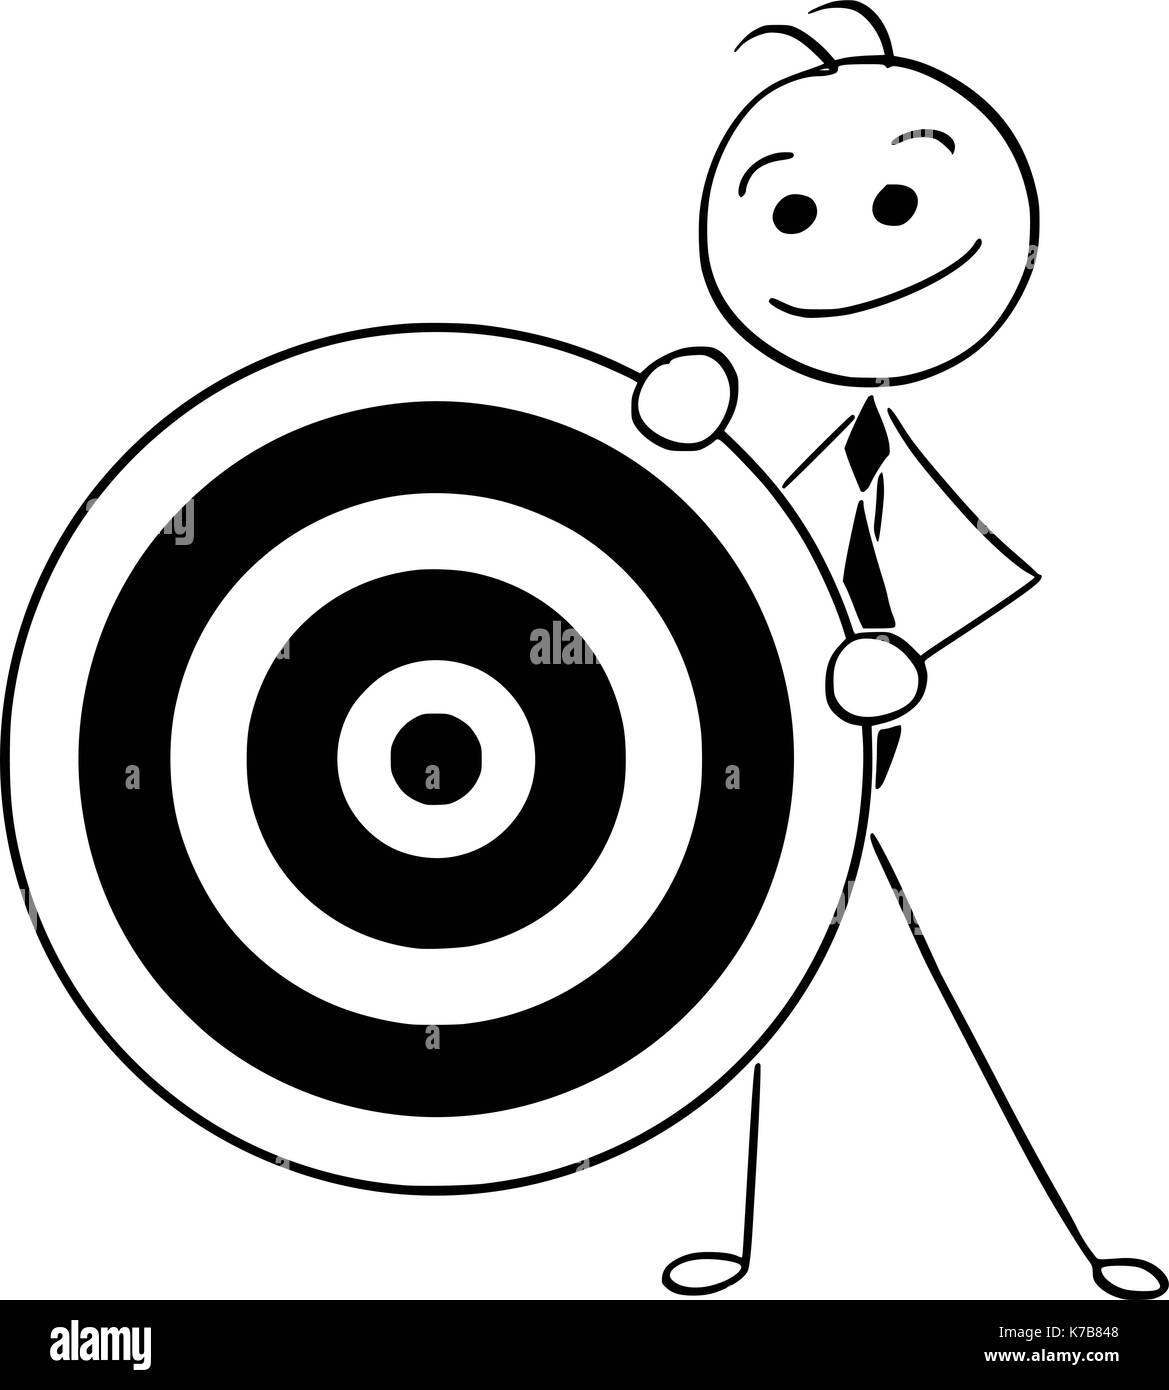 Cartoon stick man illustration of smiling business man businessman holding dartboard target. Stock Vector